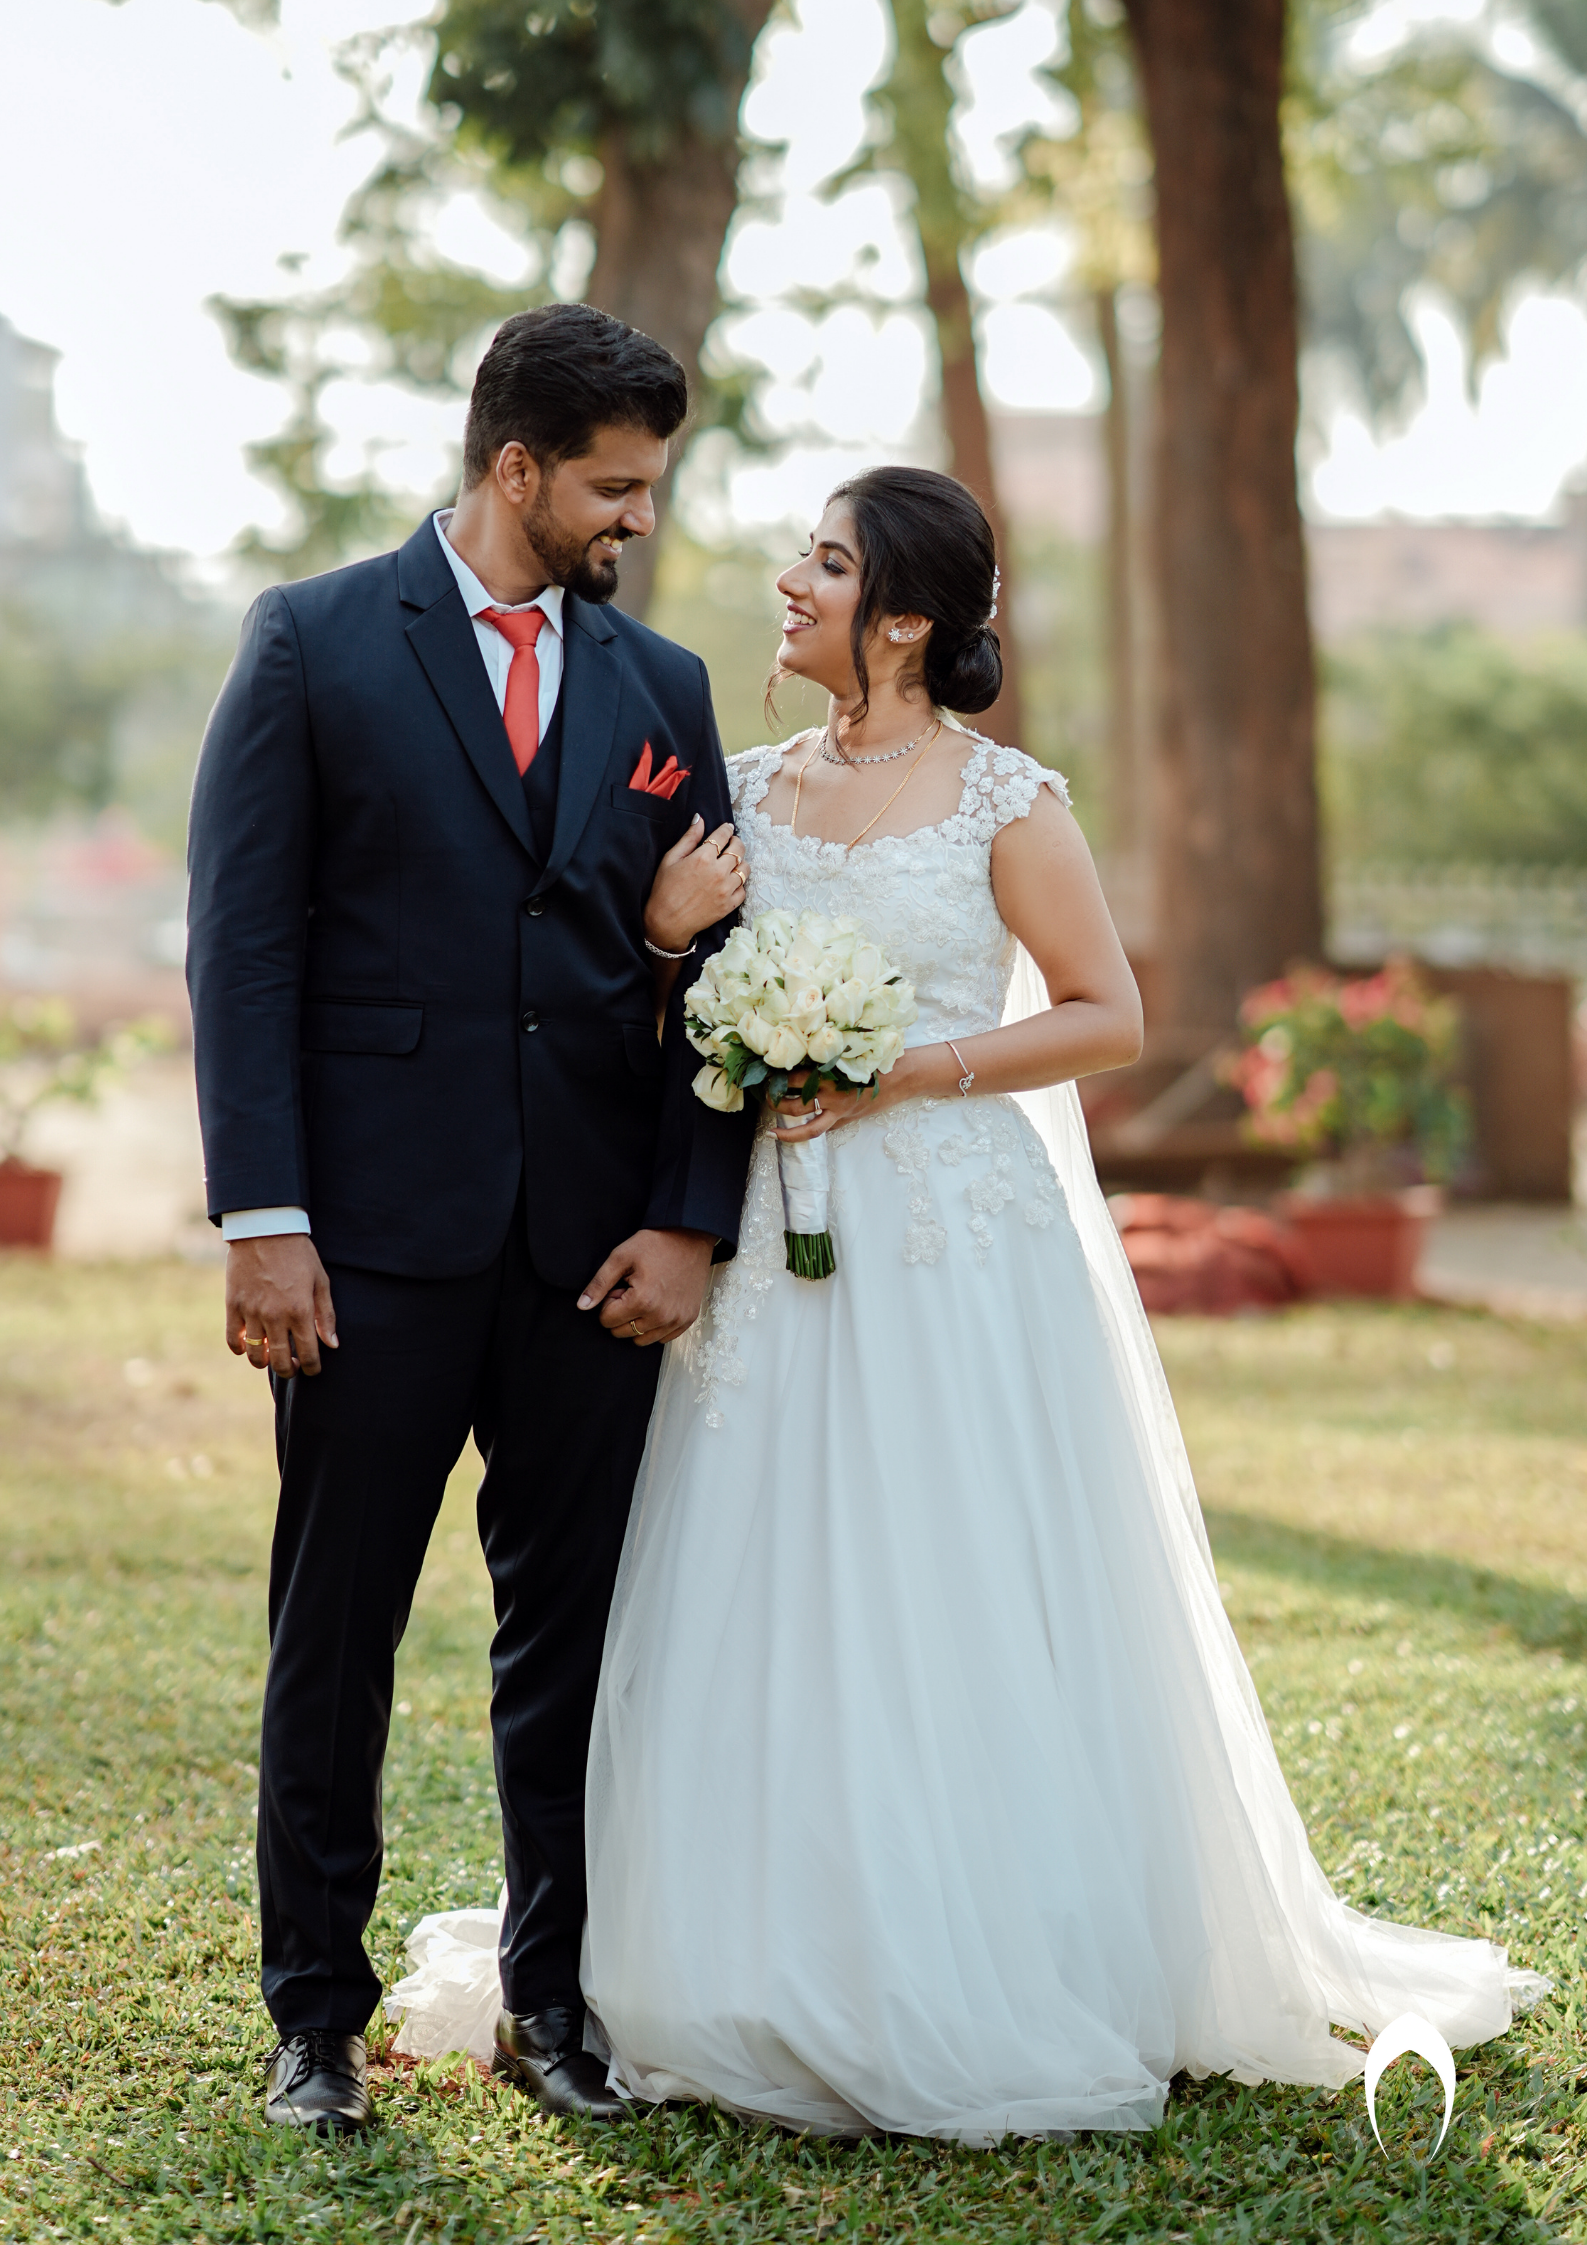 Christian bridal gown | Christian wedding sarees, Christian wedding gowns,  Beautiful bridal dresses